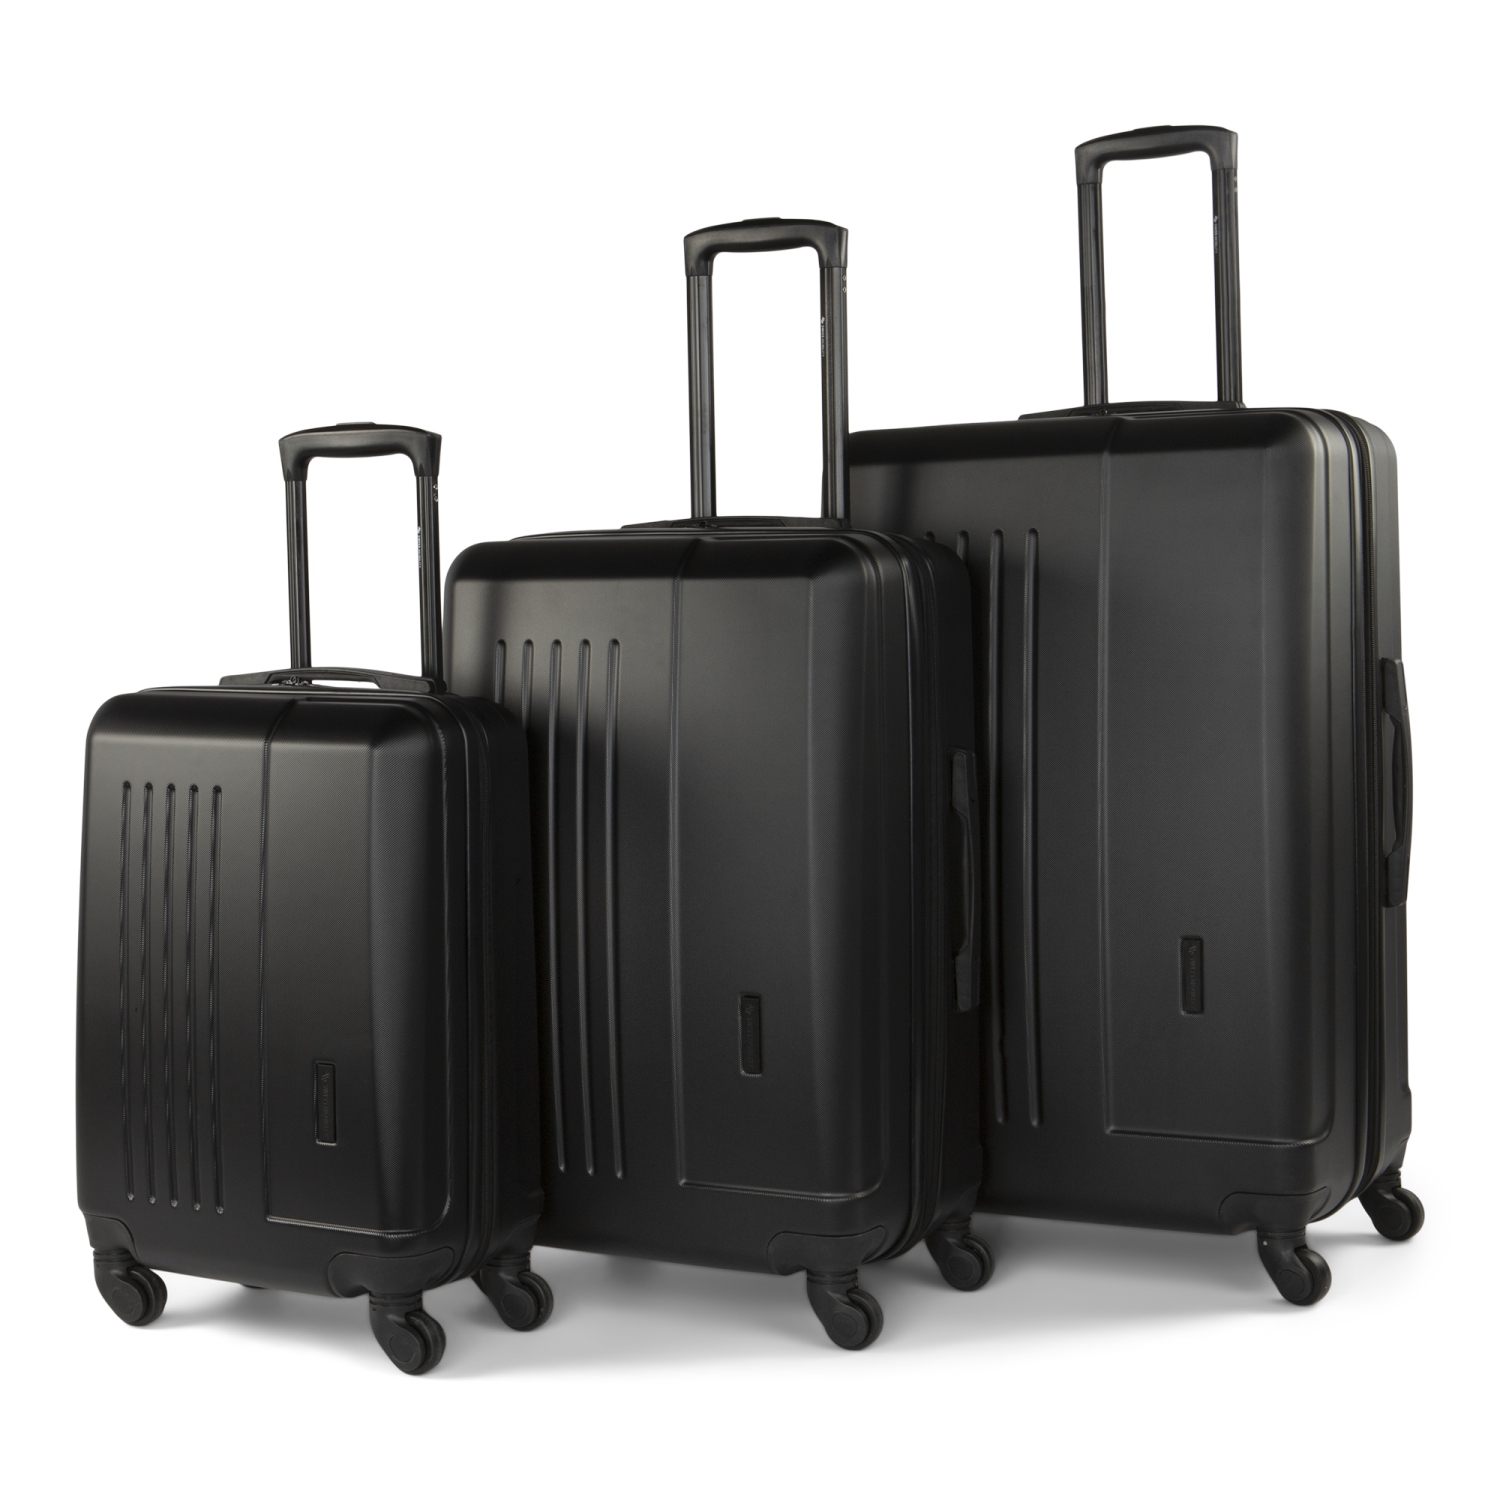 Swiss Mobility - SAN 3 pieces set hardside luggage